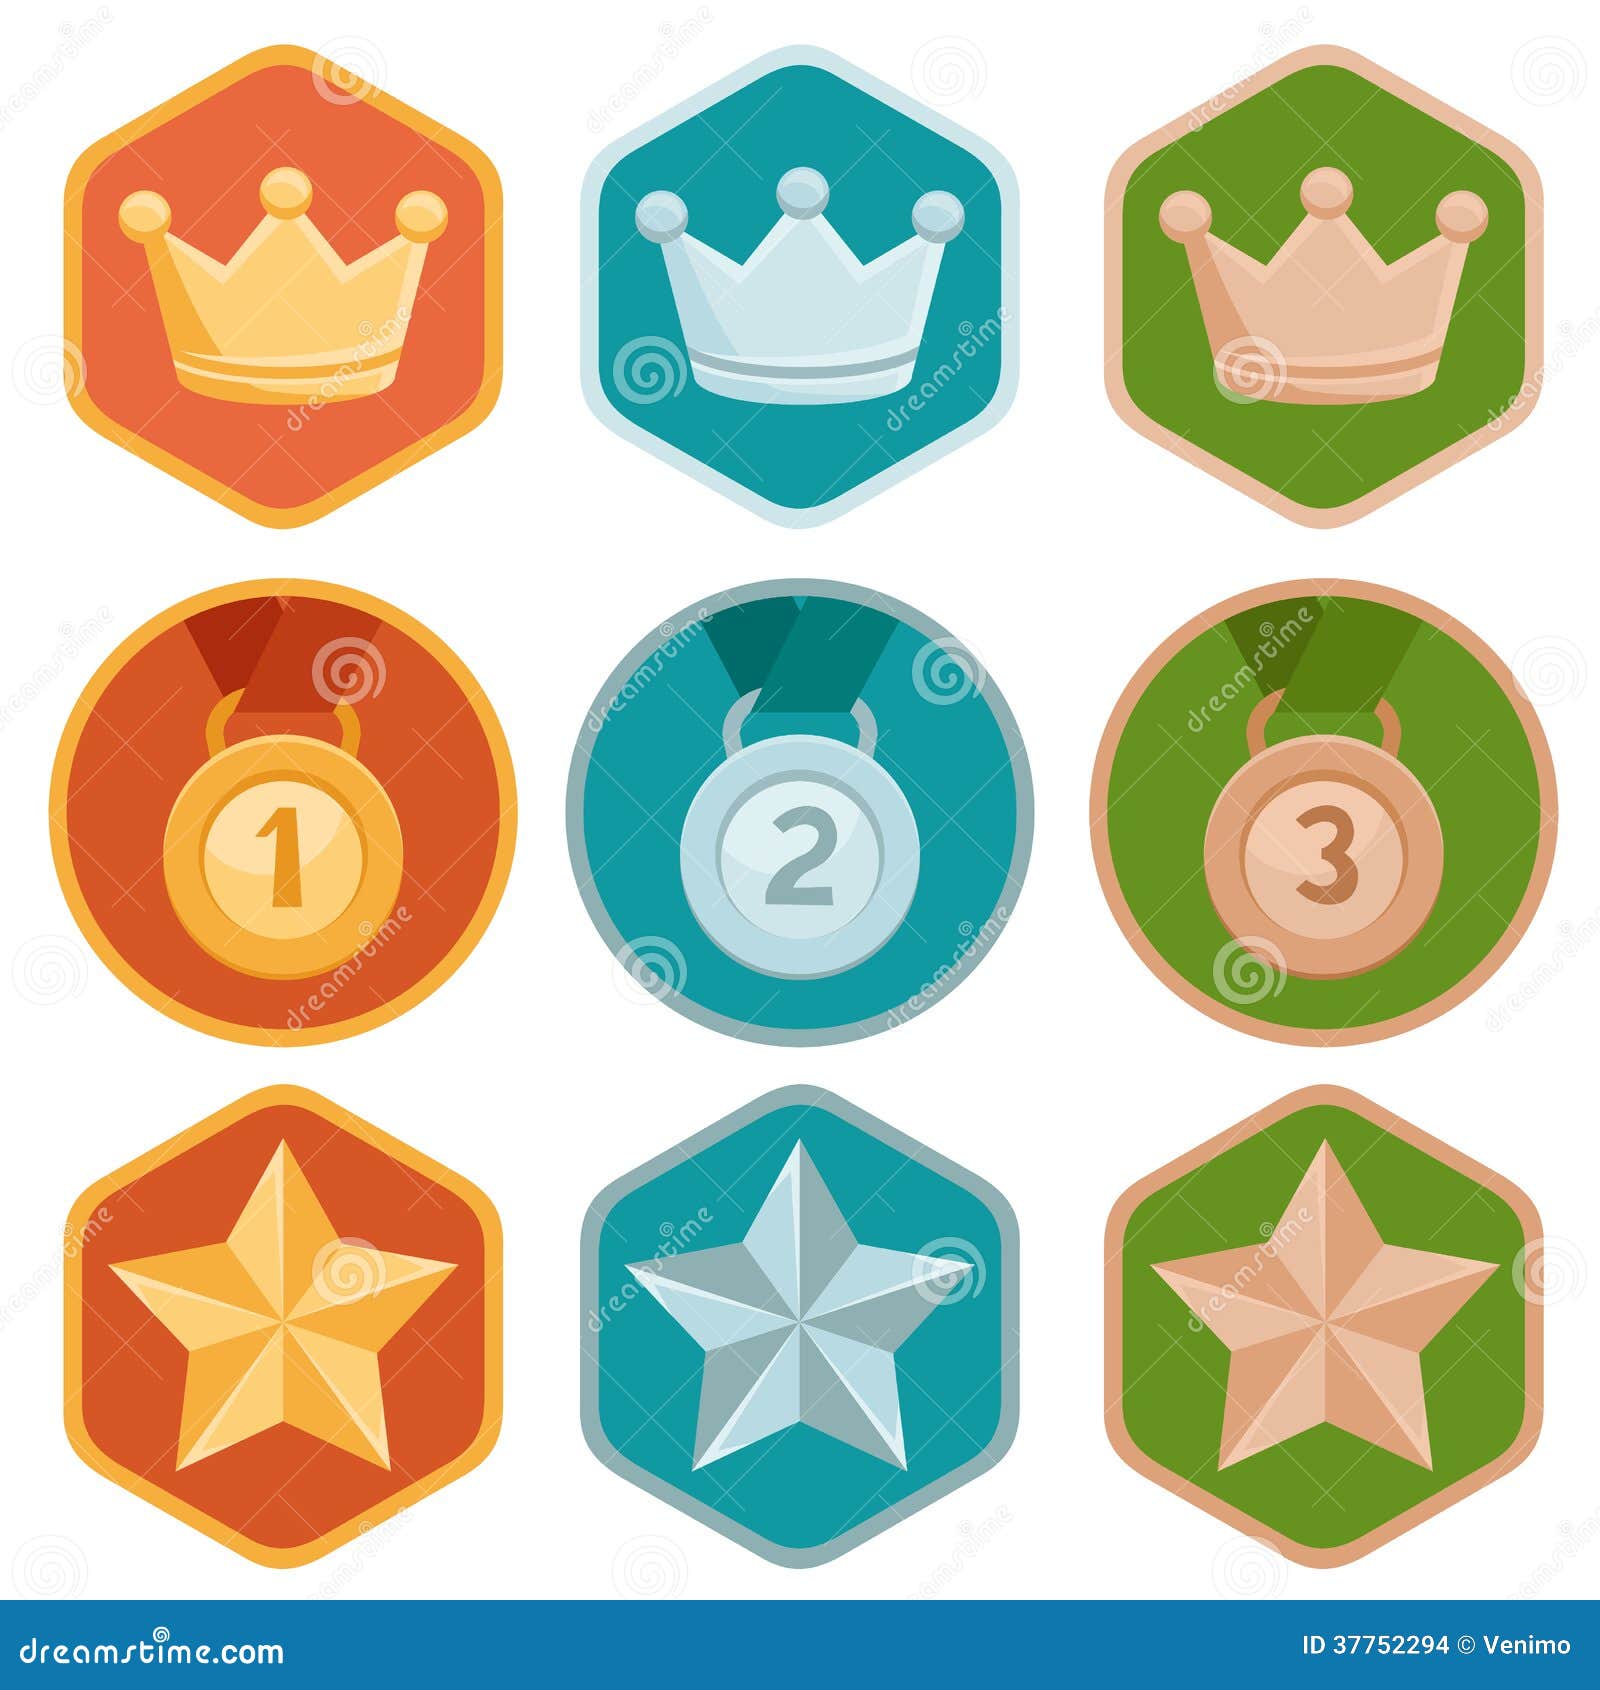 Vector Achievement Badges - Gold, Silver, Stock - Illustration challenge, level: 37752294